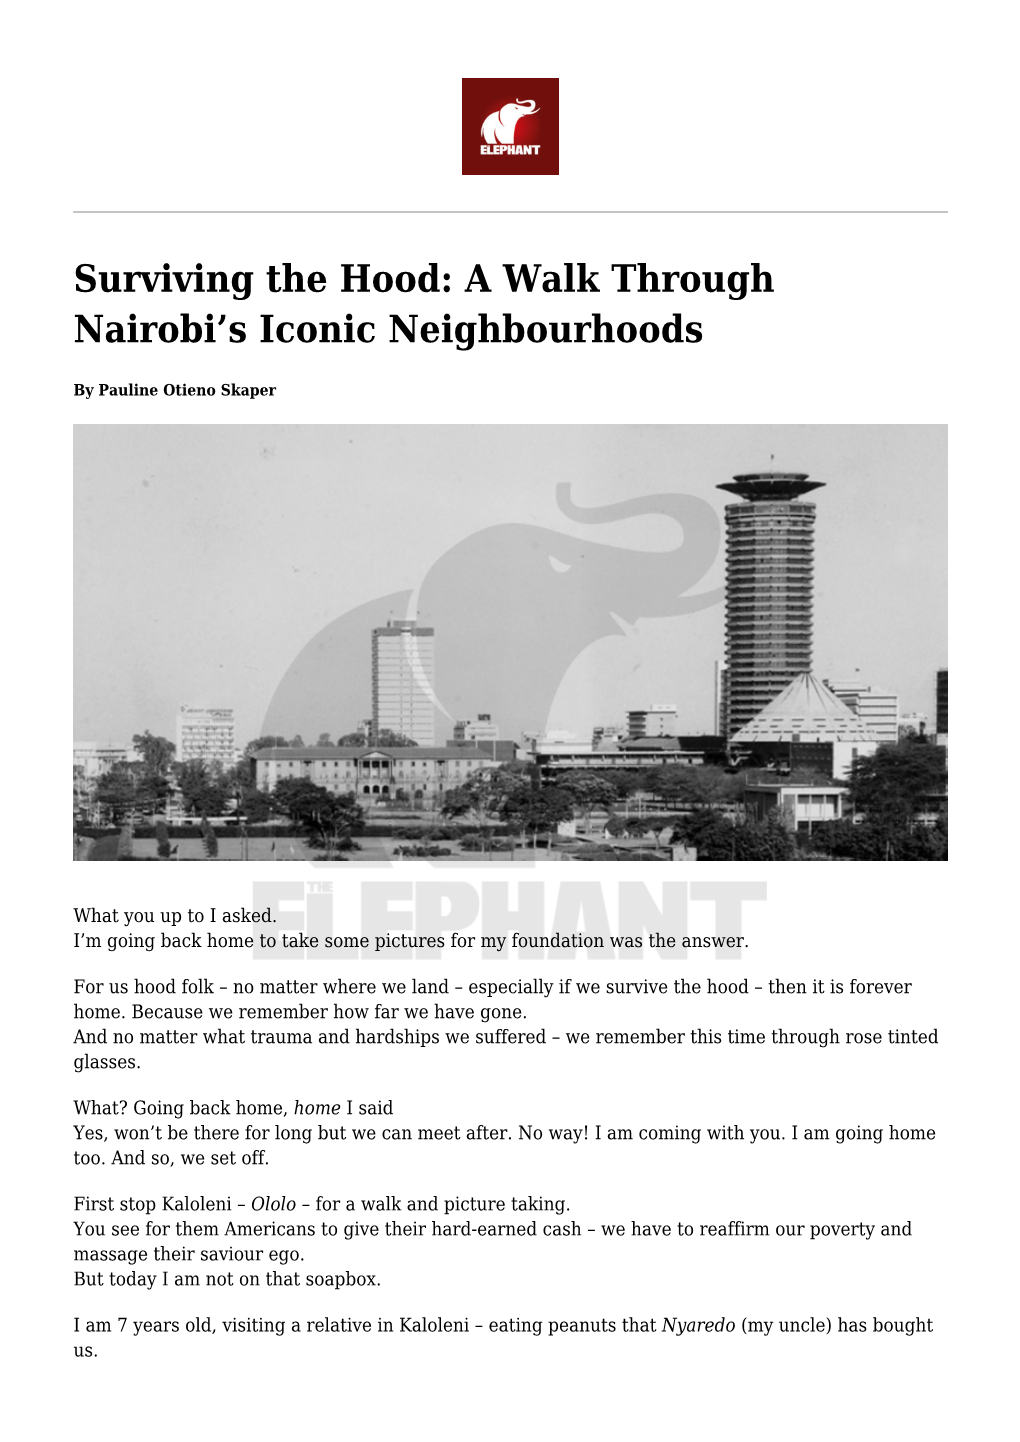 Surviving the Hood: a Walk Through Nairobi's Iconic Neighbourhoods